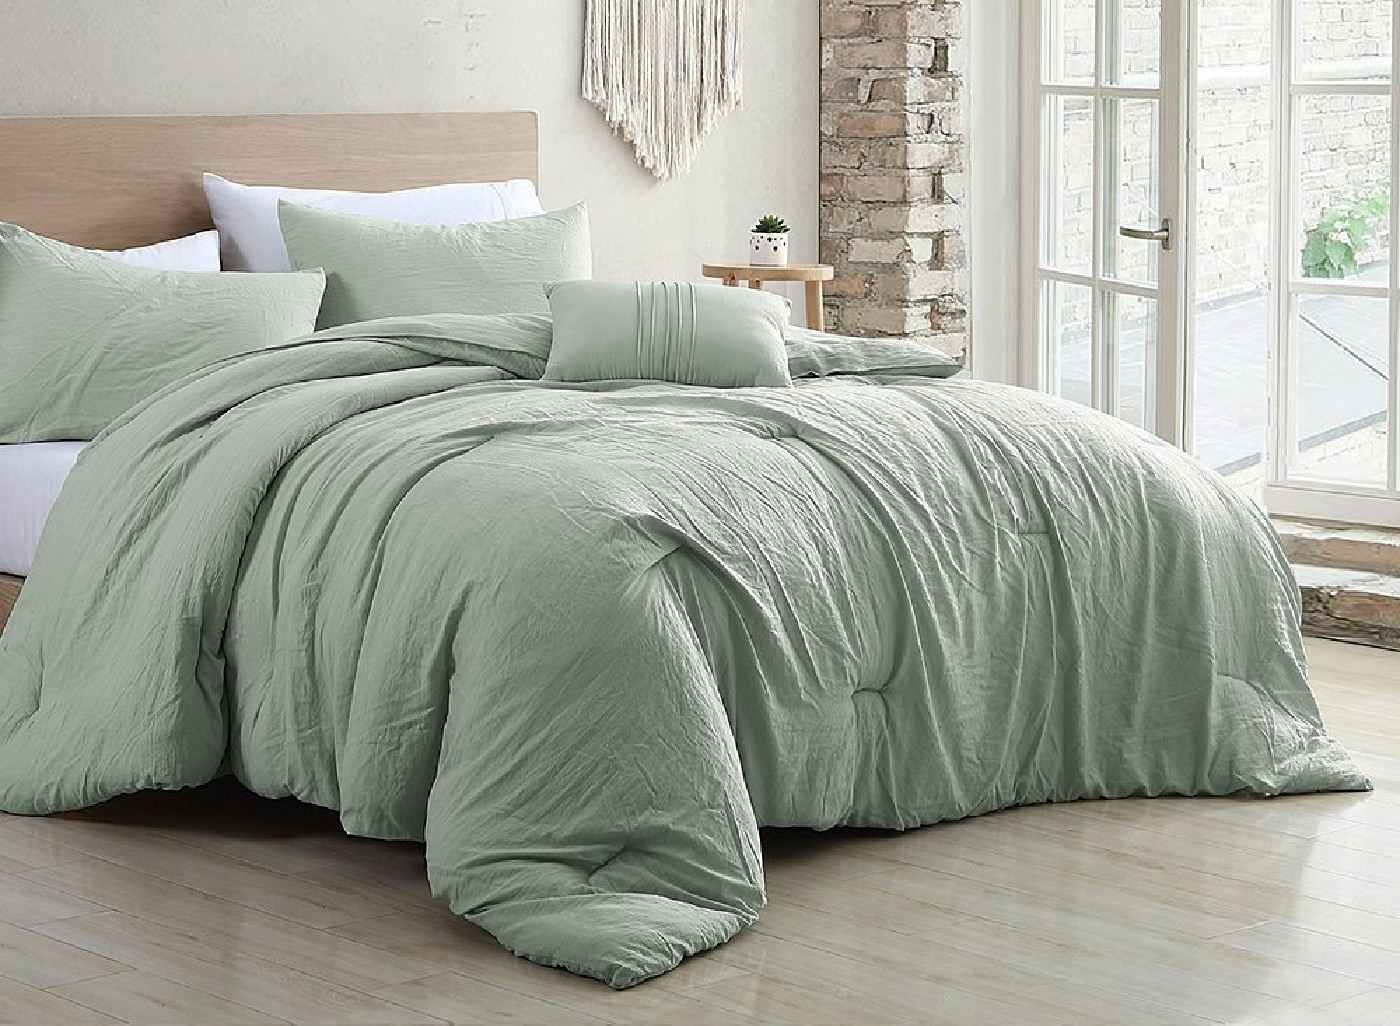 zulily-comforter-sets-2021-3